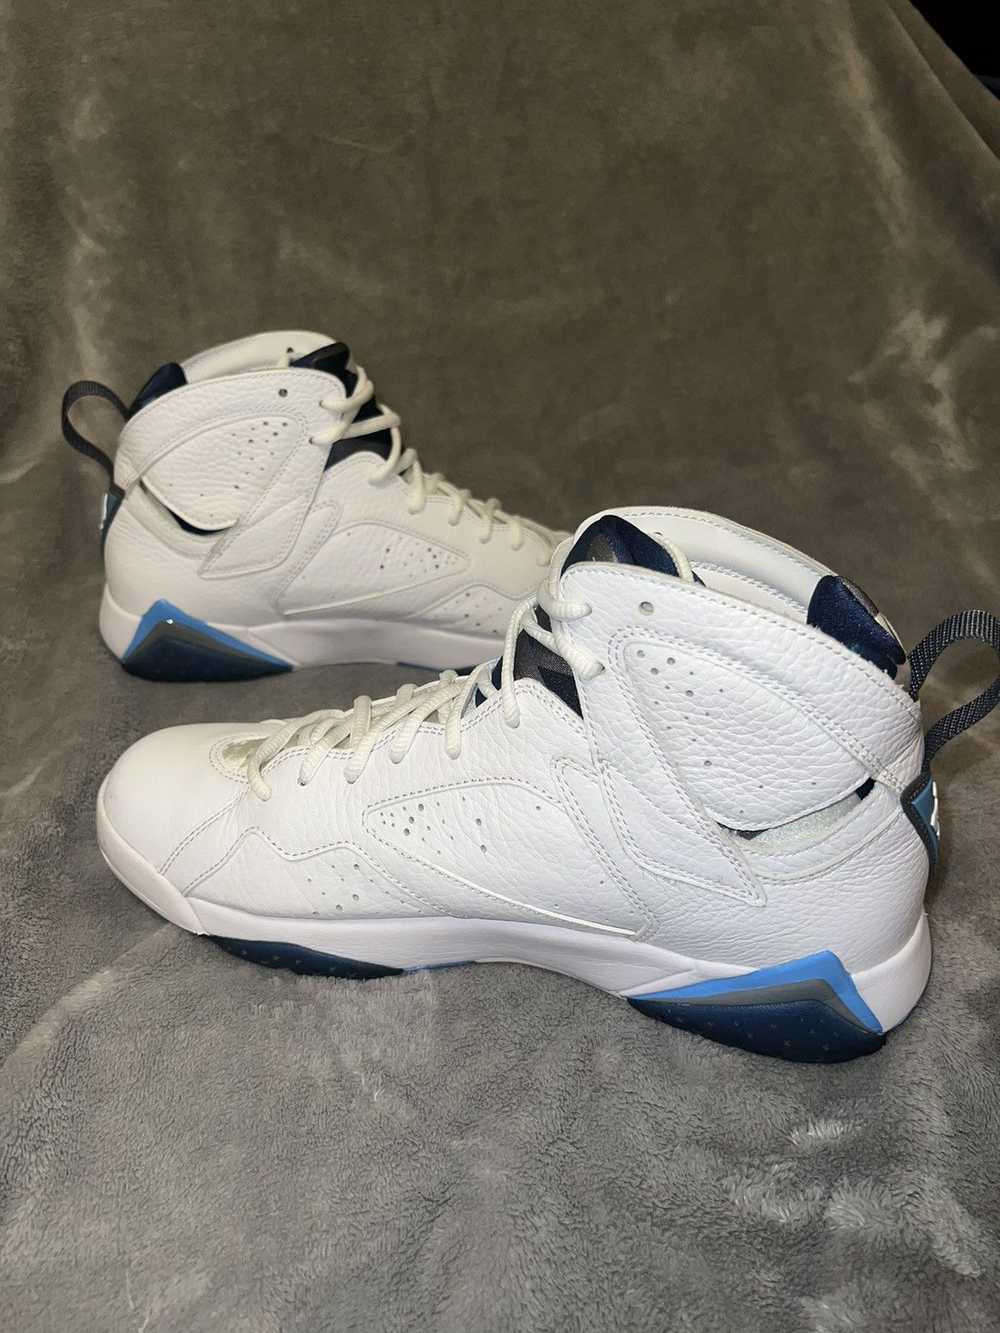 Jordan Brand × Nike Jordan 7 “French Blue” - image 3